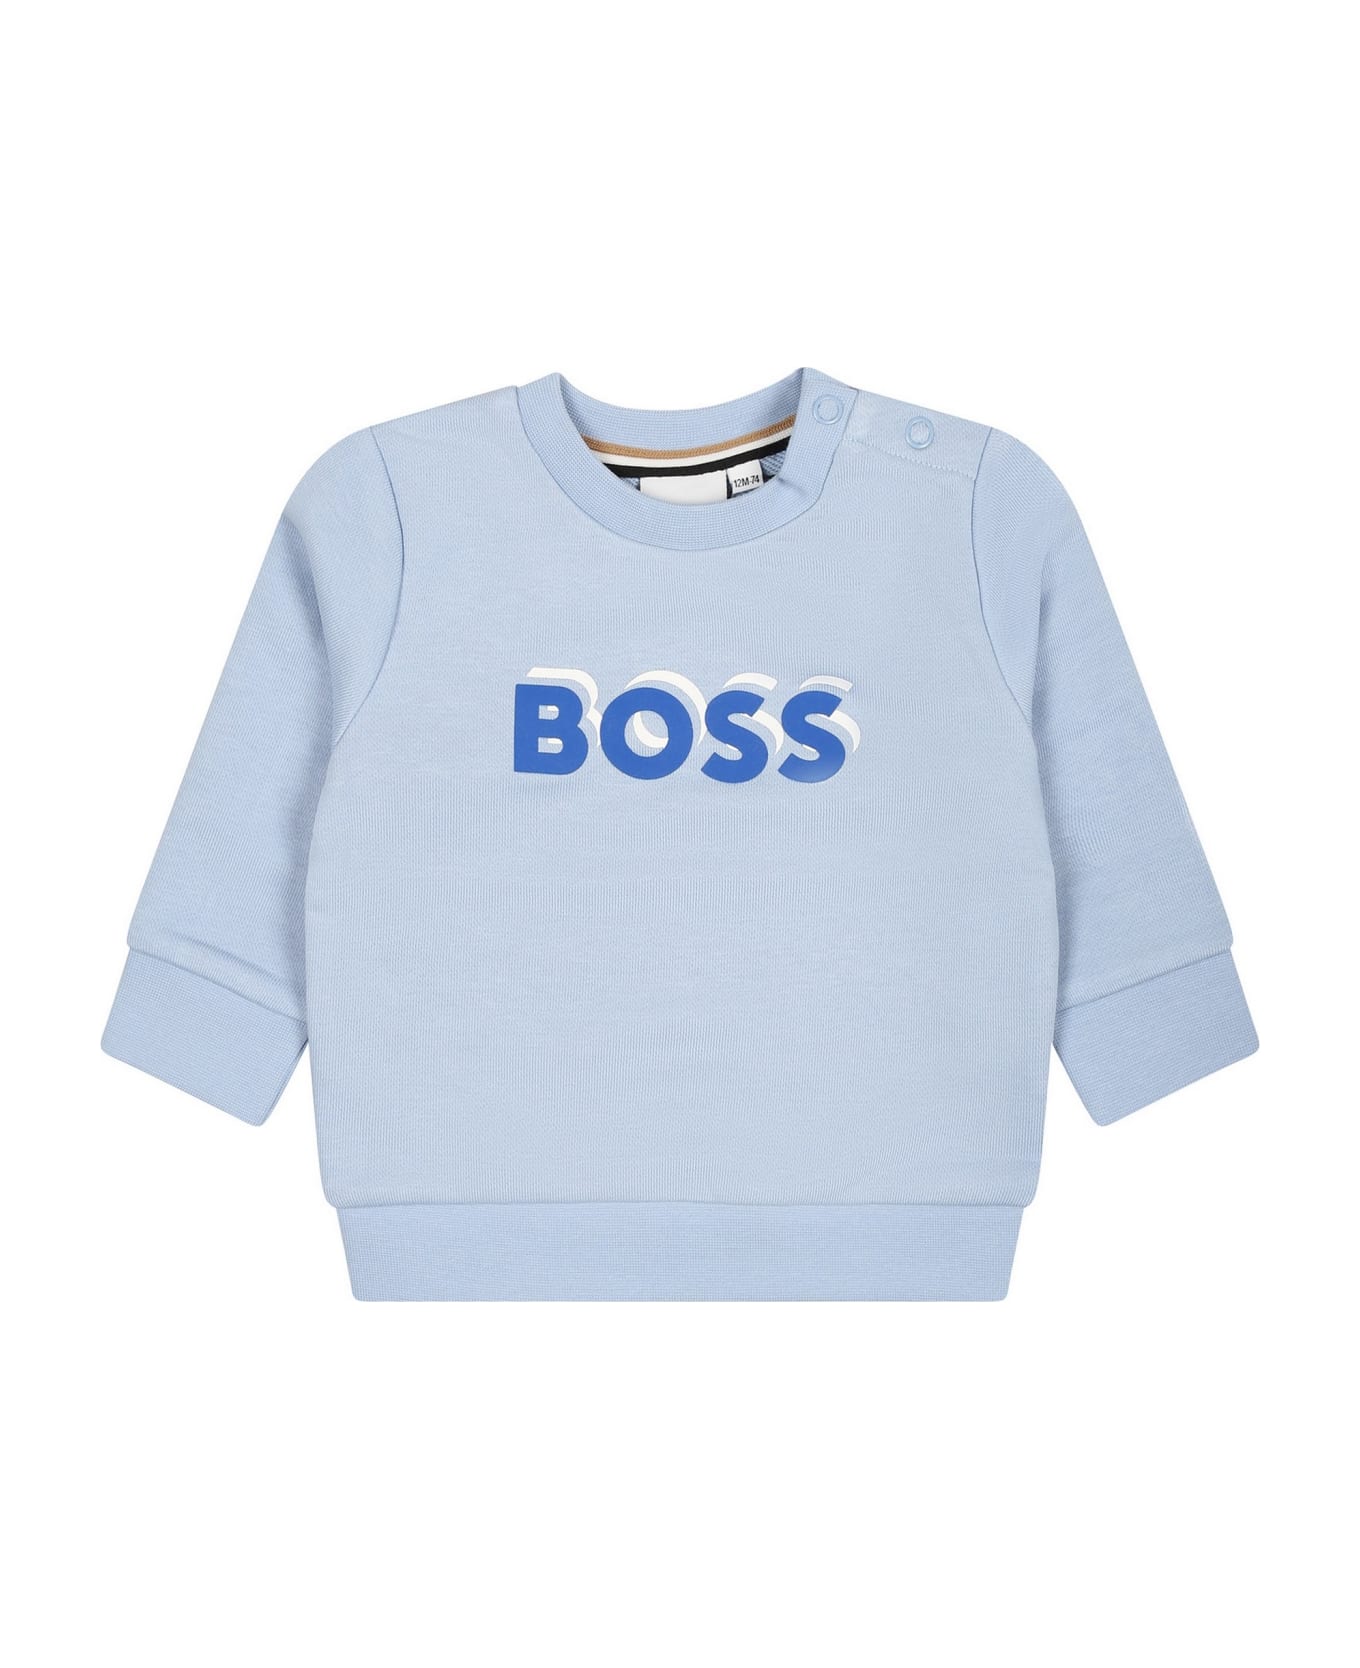 Hugo Boss Round Neck Sweatshirts Celeste - Light Blue